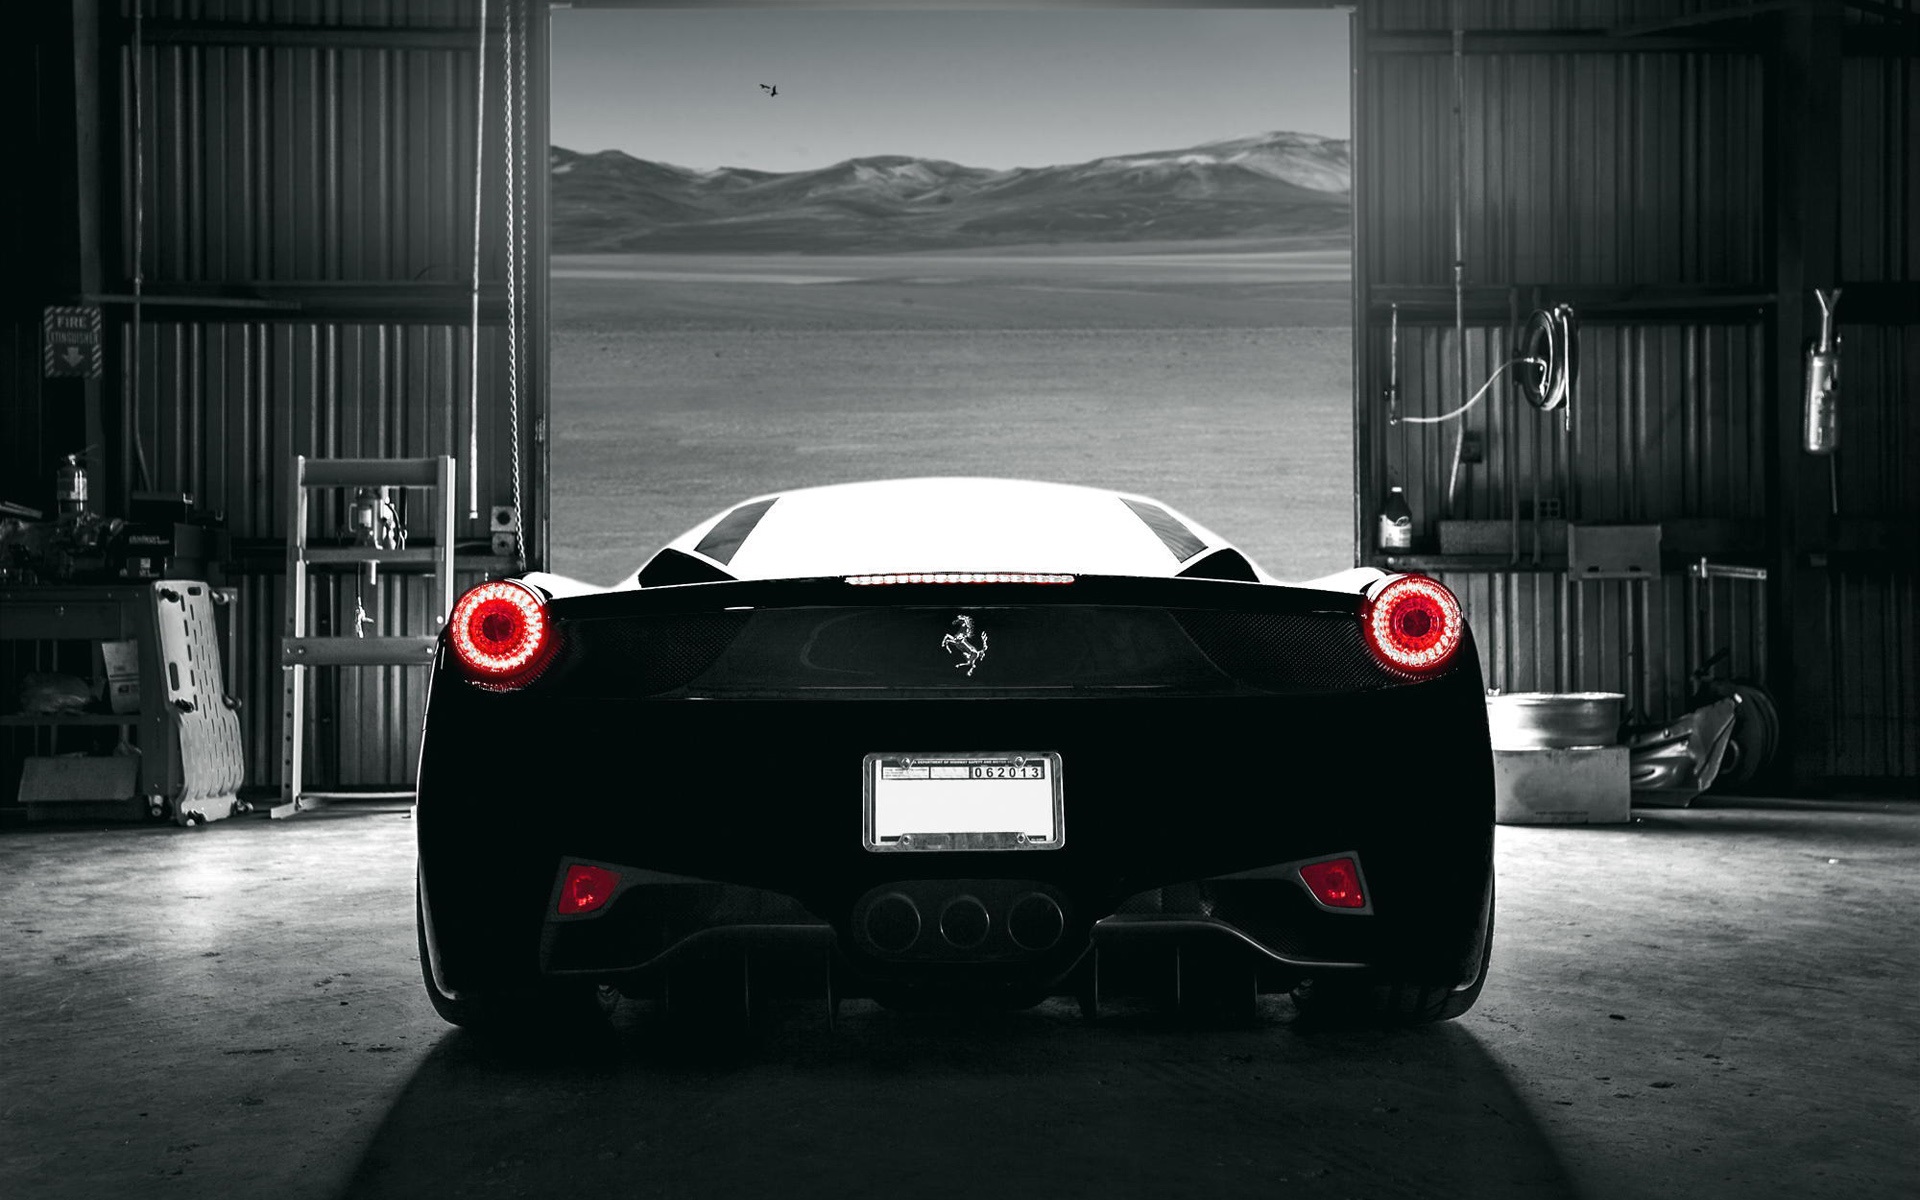 Ferrari Wallpaper HD